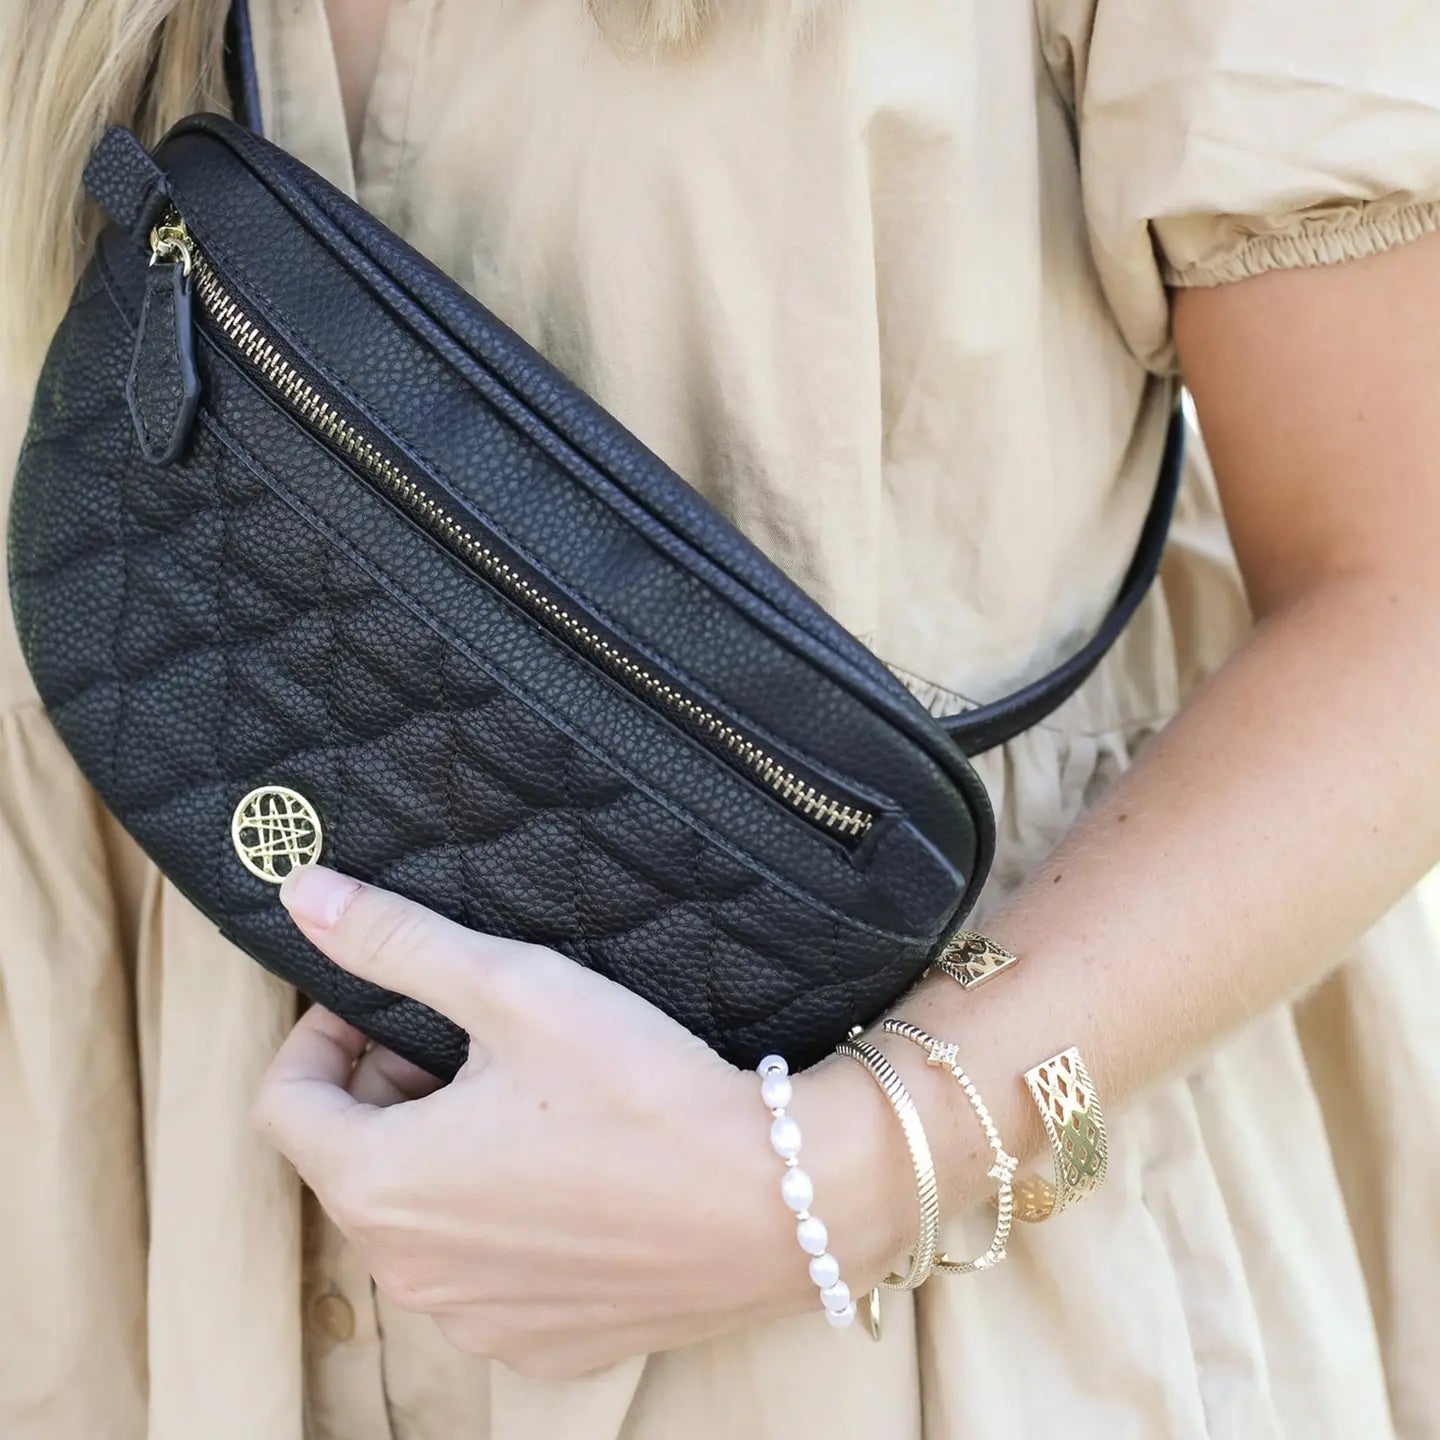 Natalie Wood - Grace Belt Bag in Black-130 Accessories-Natalie Wood-July & June Women's Fashion Boutique Located in San Antonio, Texas